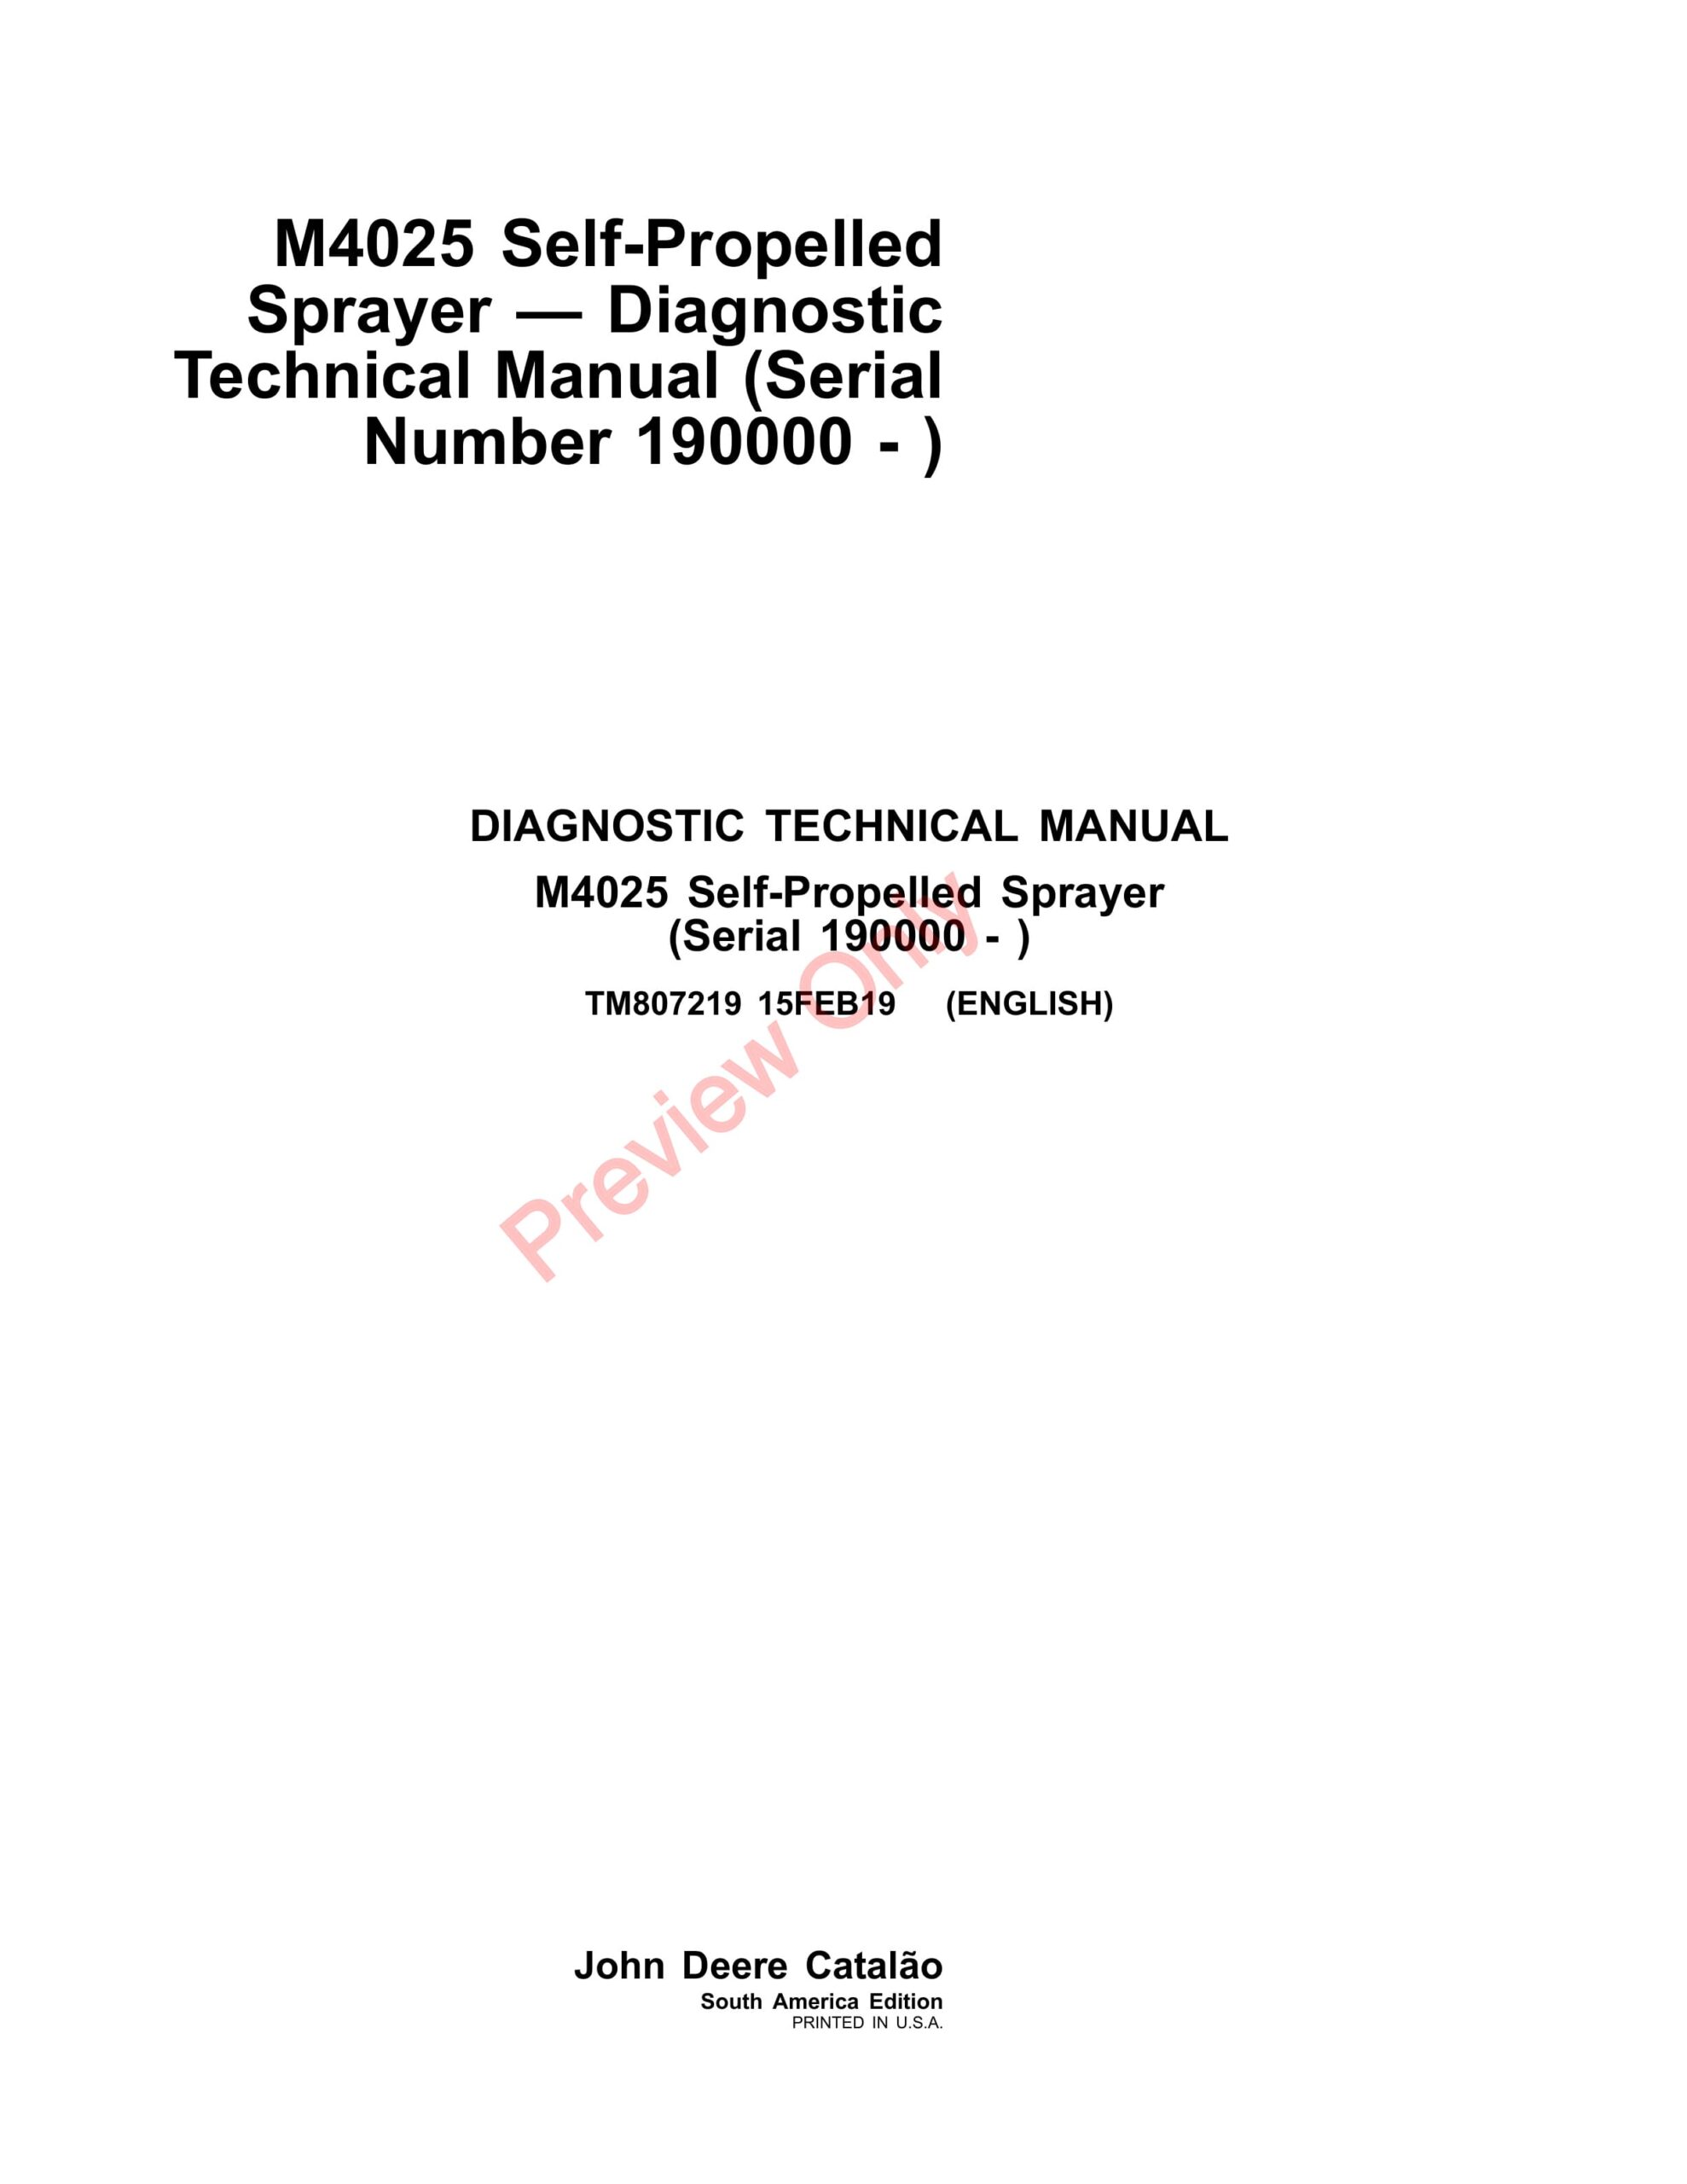 John Deere M4025 Self-Propelled Sprayer Diagnostic Technical Manual TM807219 15FEB19-1